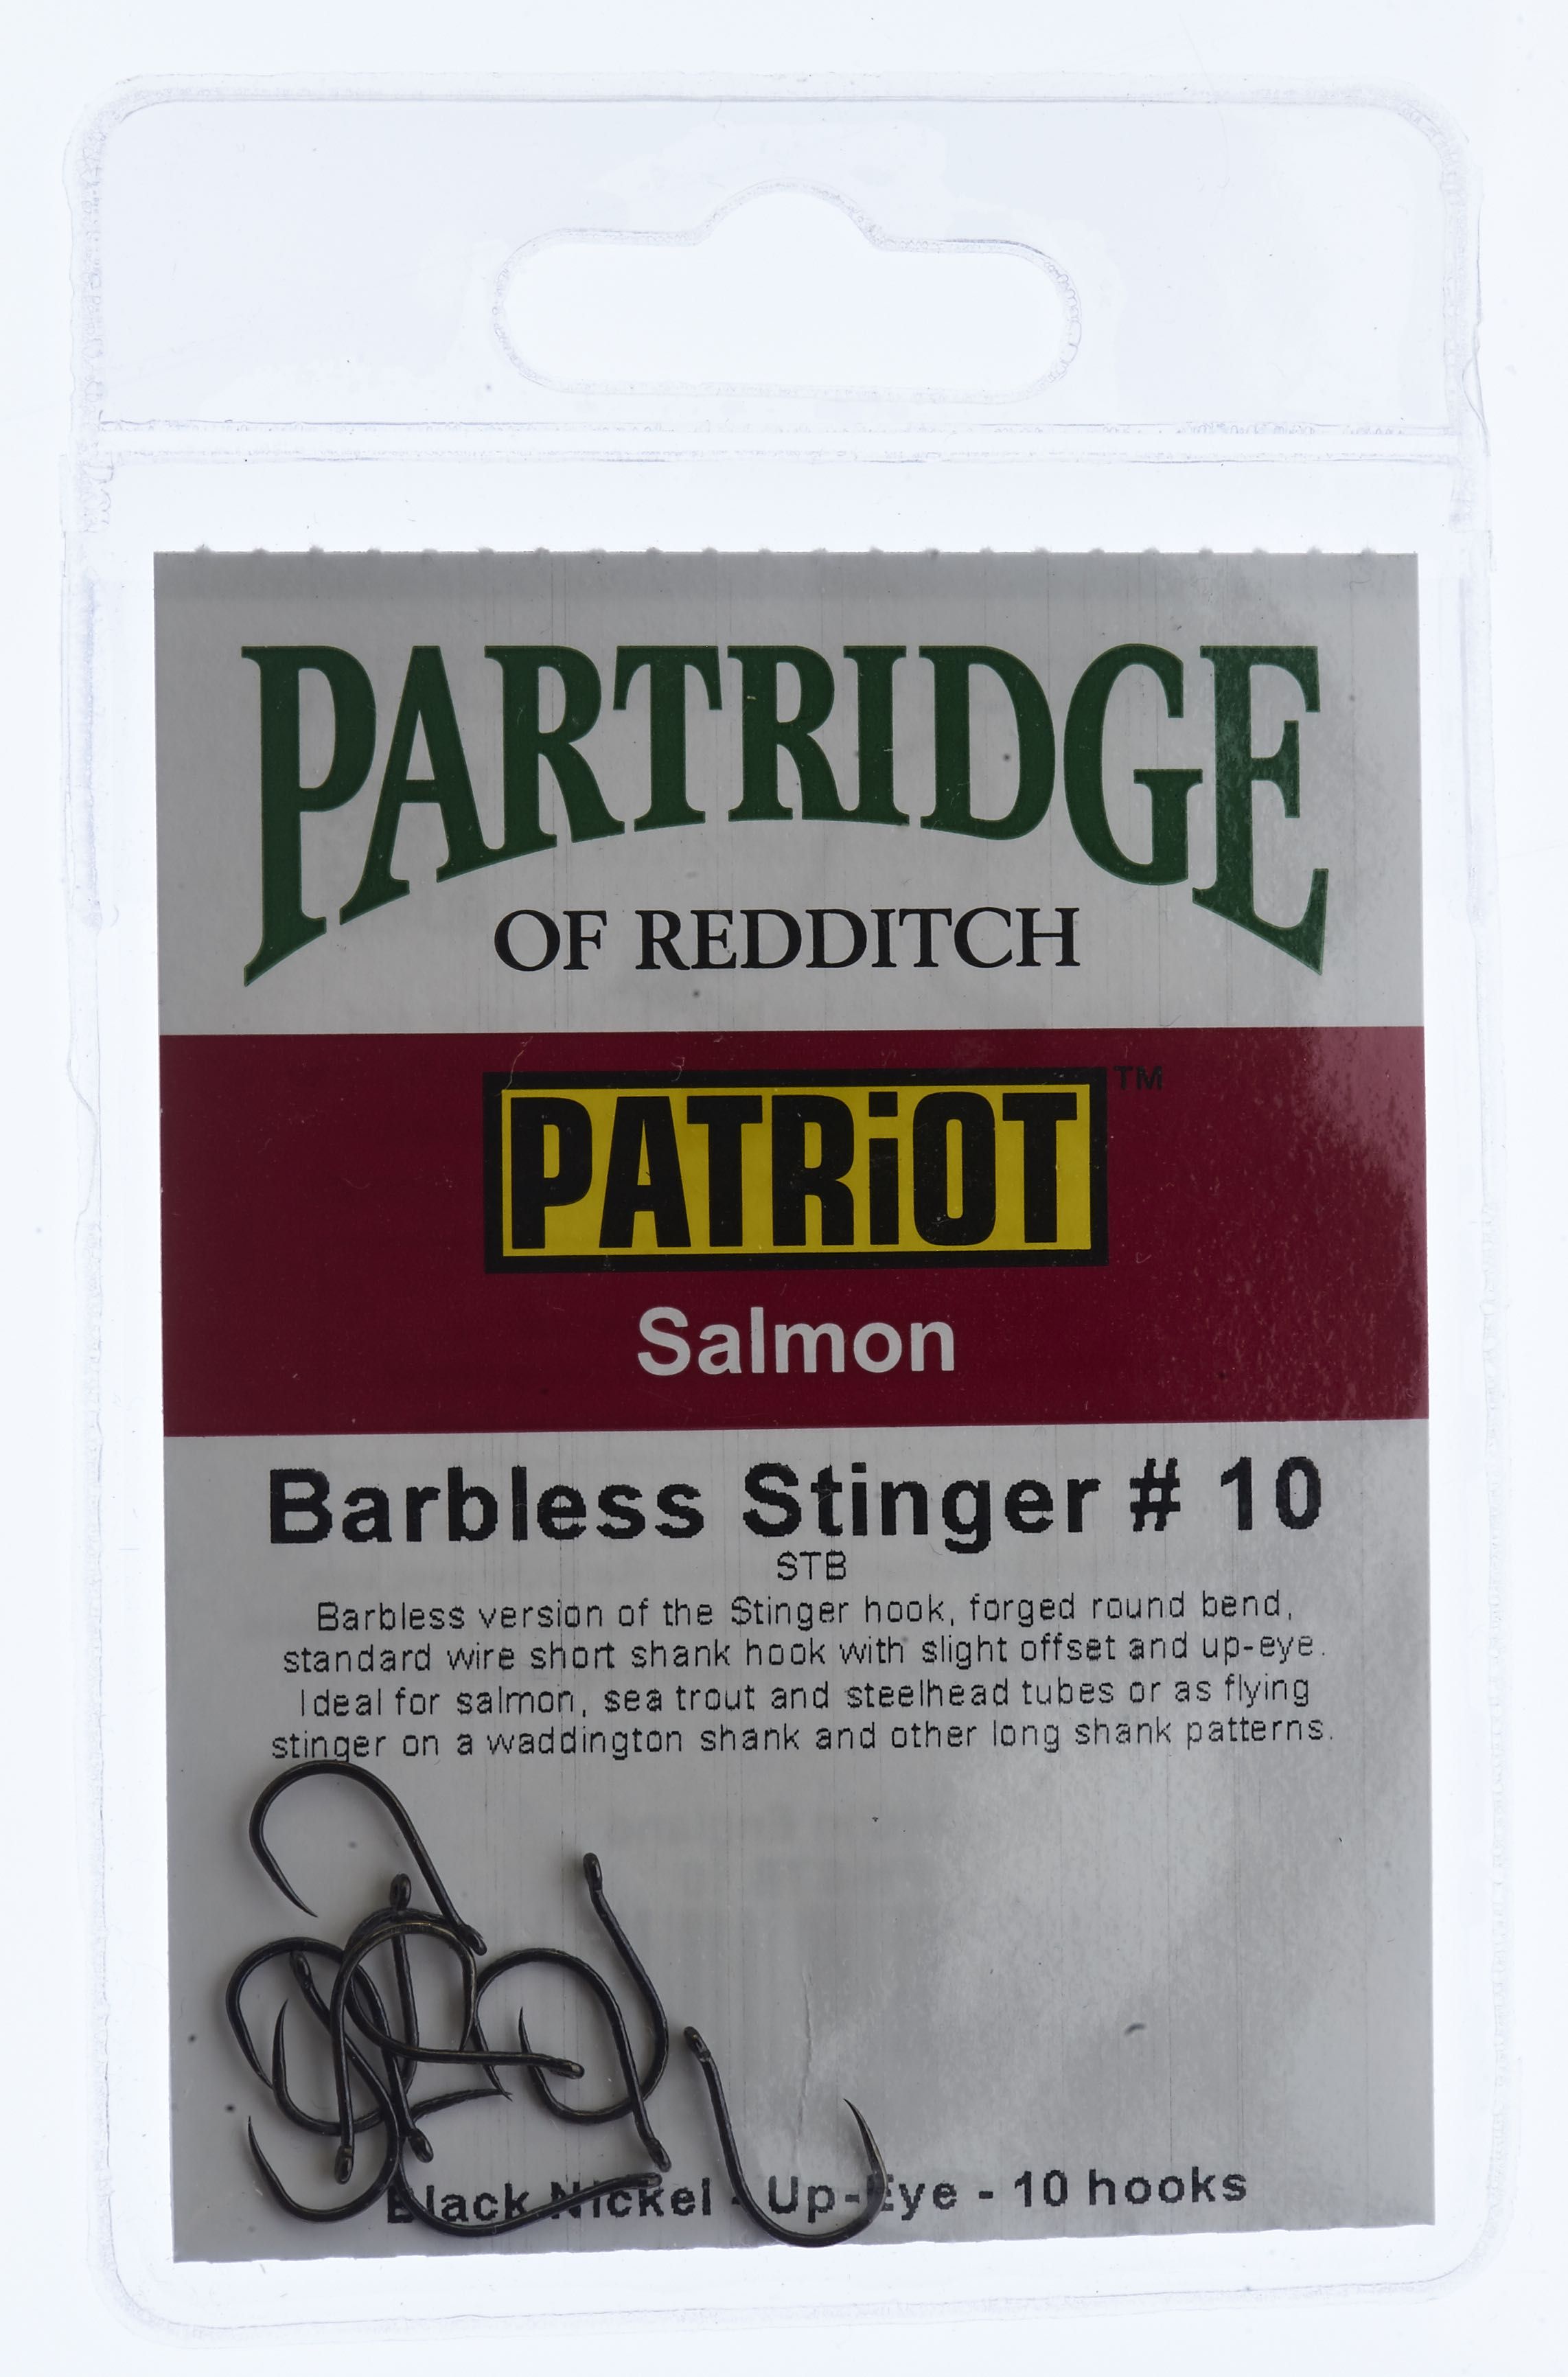 Partridge Patriot Barbless Stinger # 10